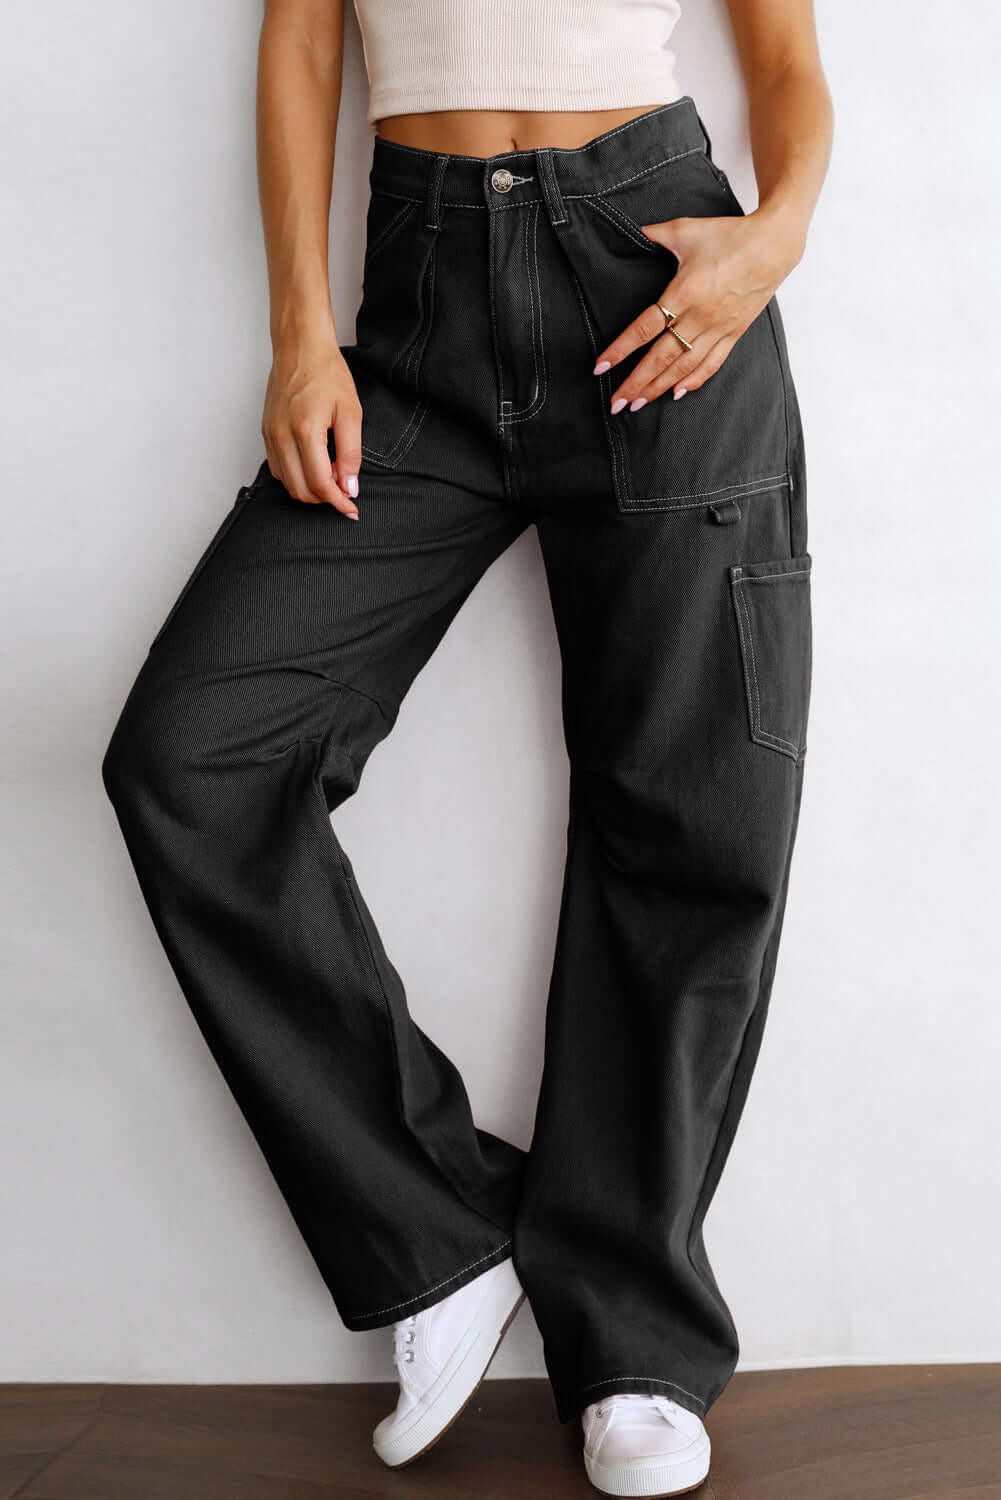 Black High Waist Straight Leg Cargo Pants with Pockets - Dixie Hike & Style